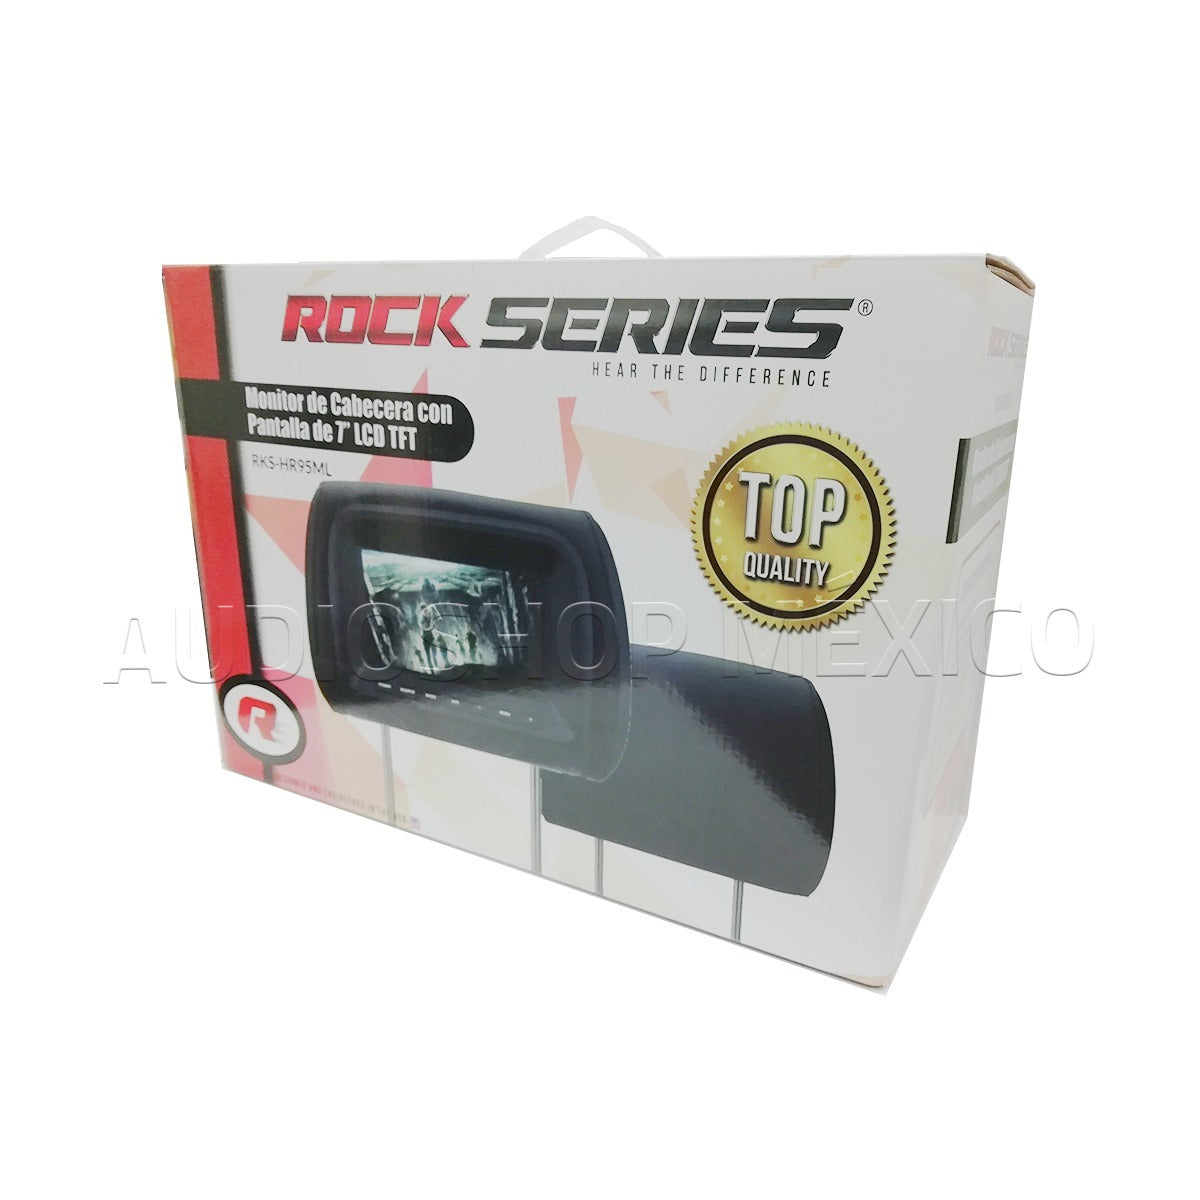 Monitor De Cabecera Con Pantalla 7 Lcd Rockseries Rks-hr95ml - Audioshop México lo mejor en Car Audio en México -  Rock Series